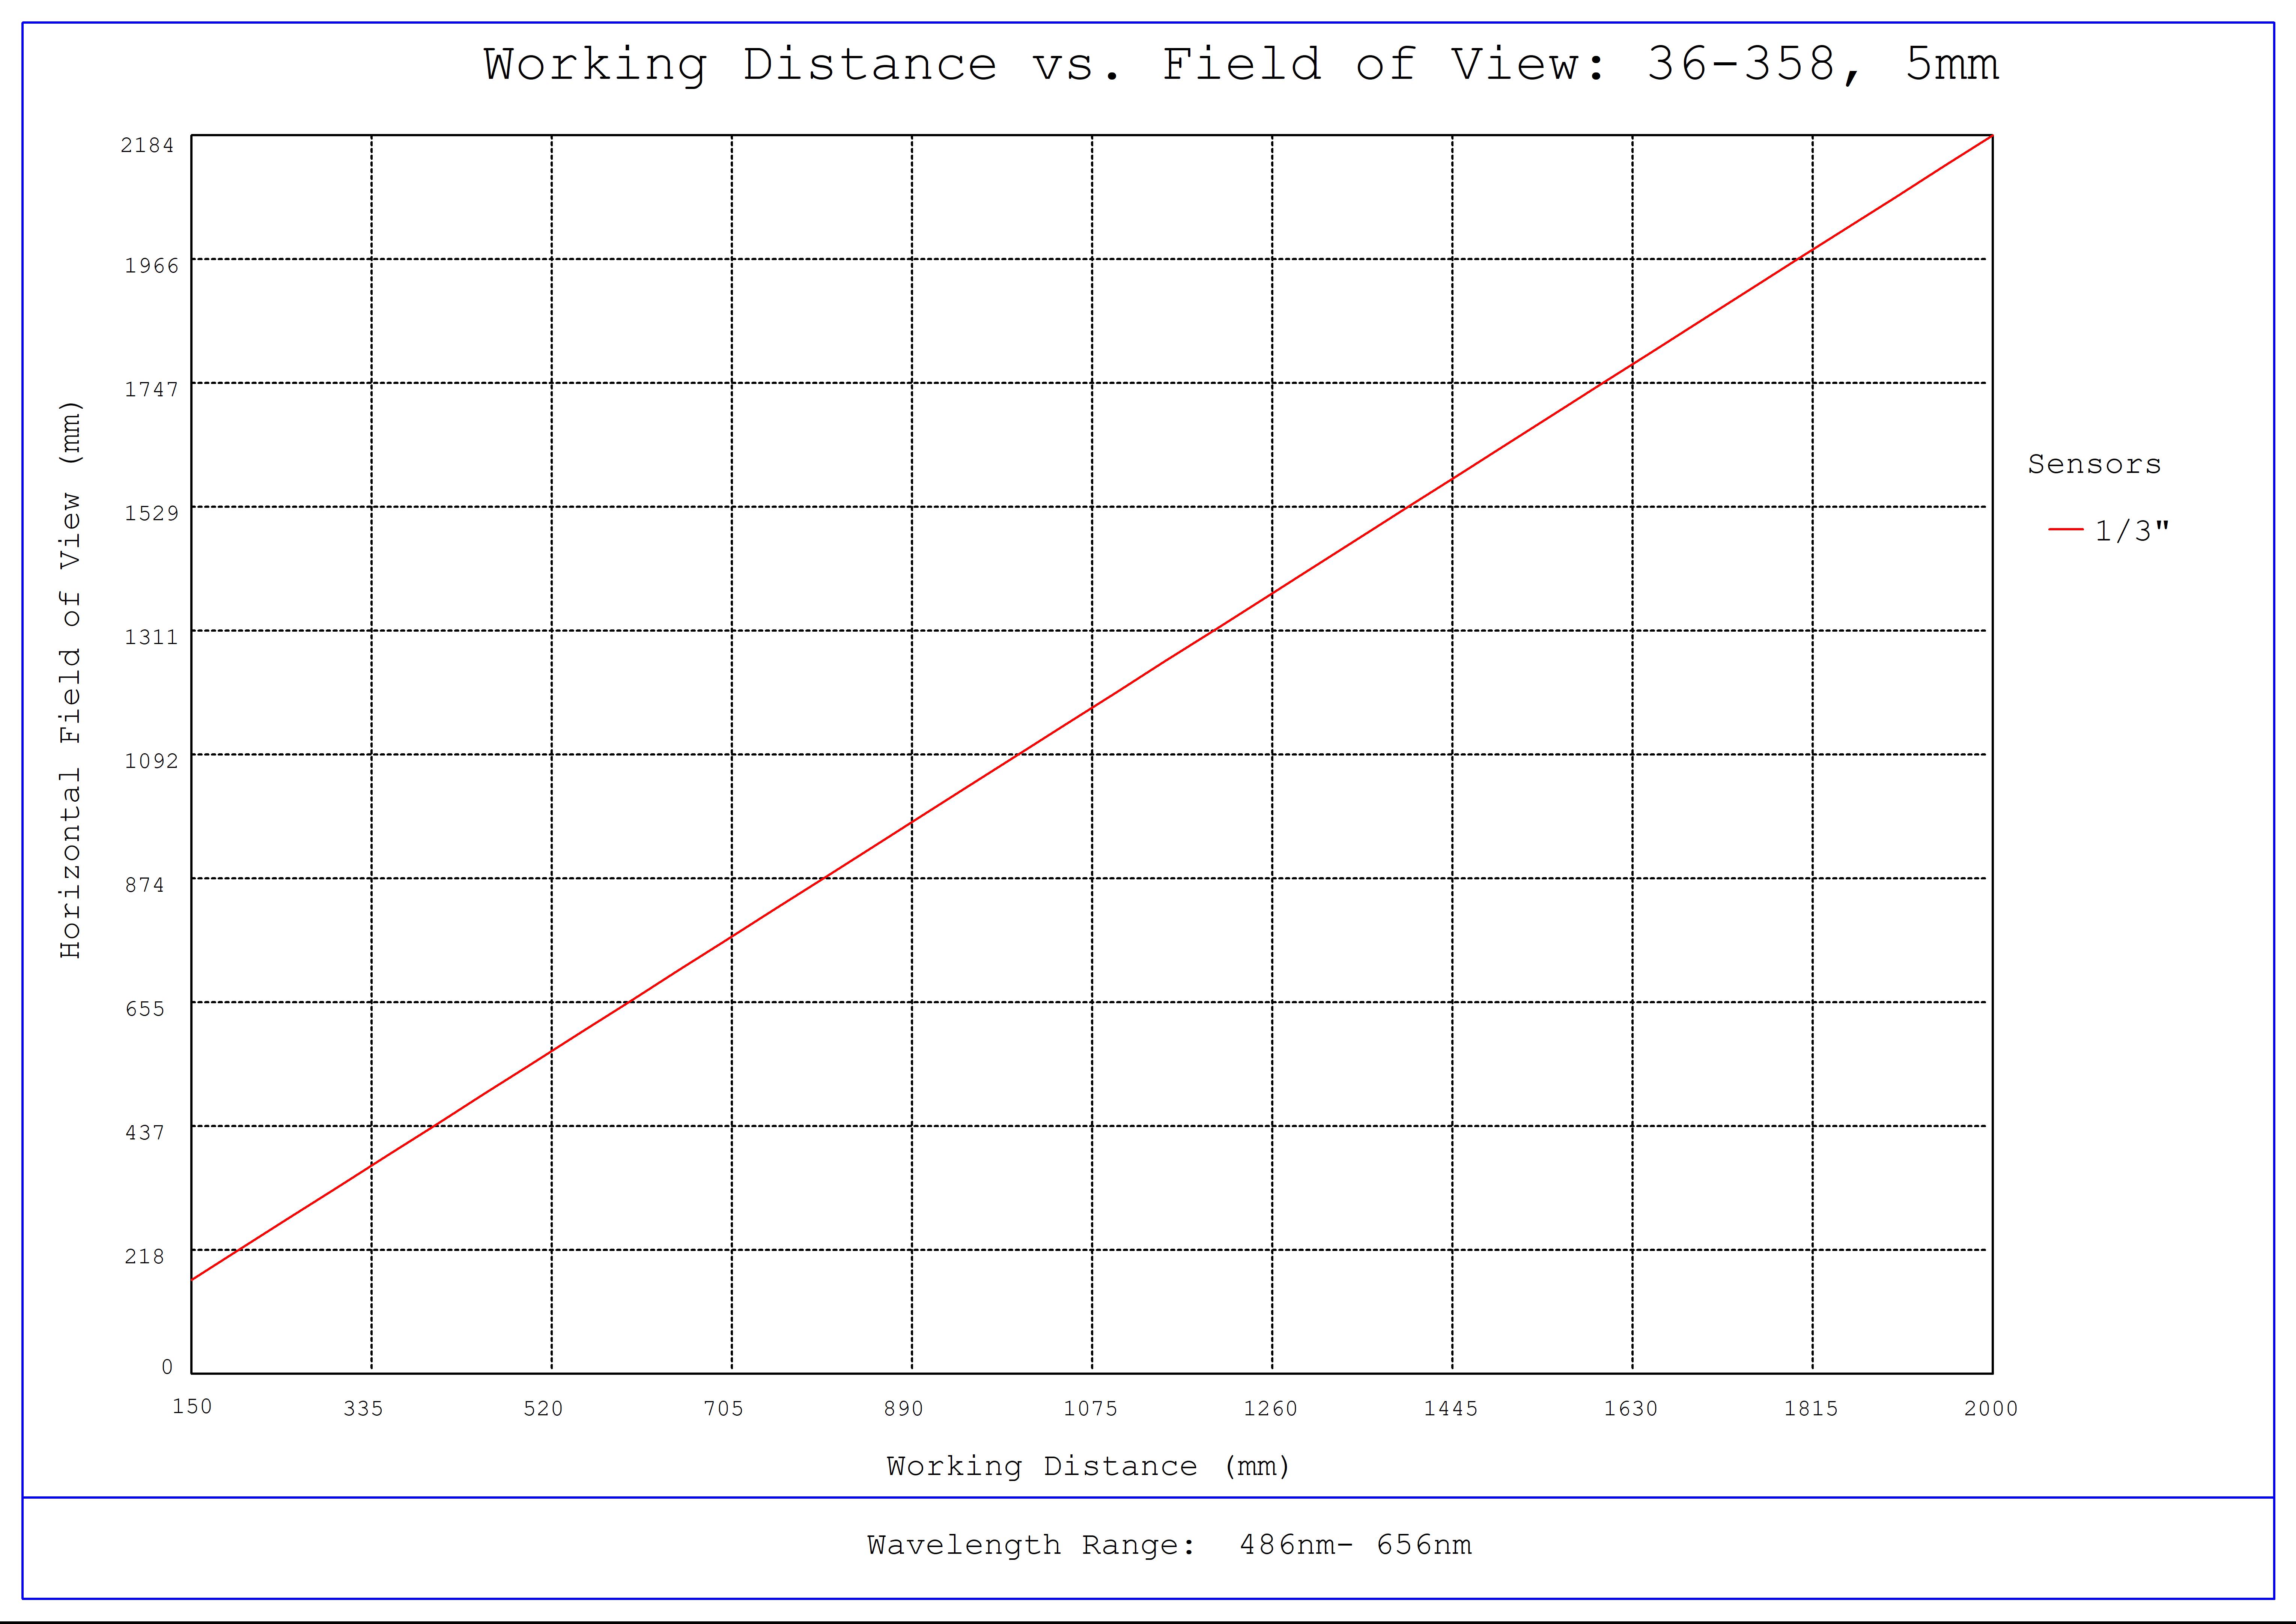 #36-358, 5mm FL f/5.6, Rugged Blue Series M12 Lens, Working Distance versus Field of View Plot